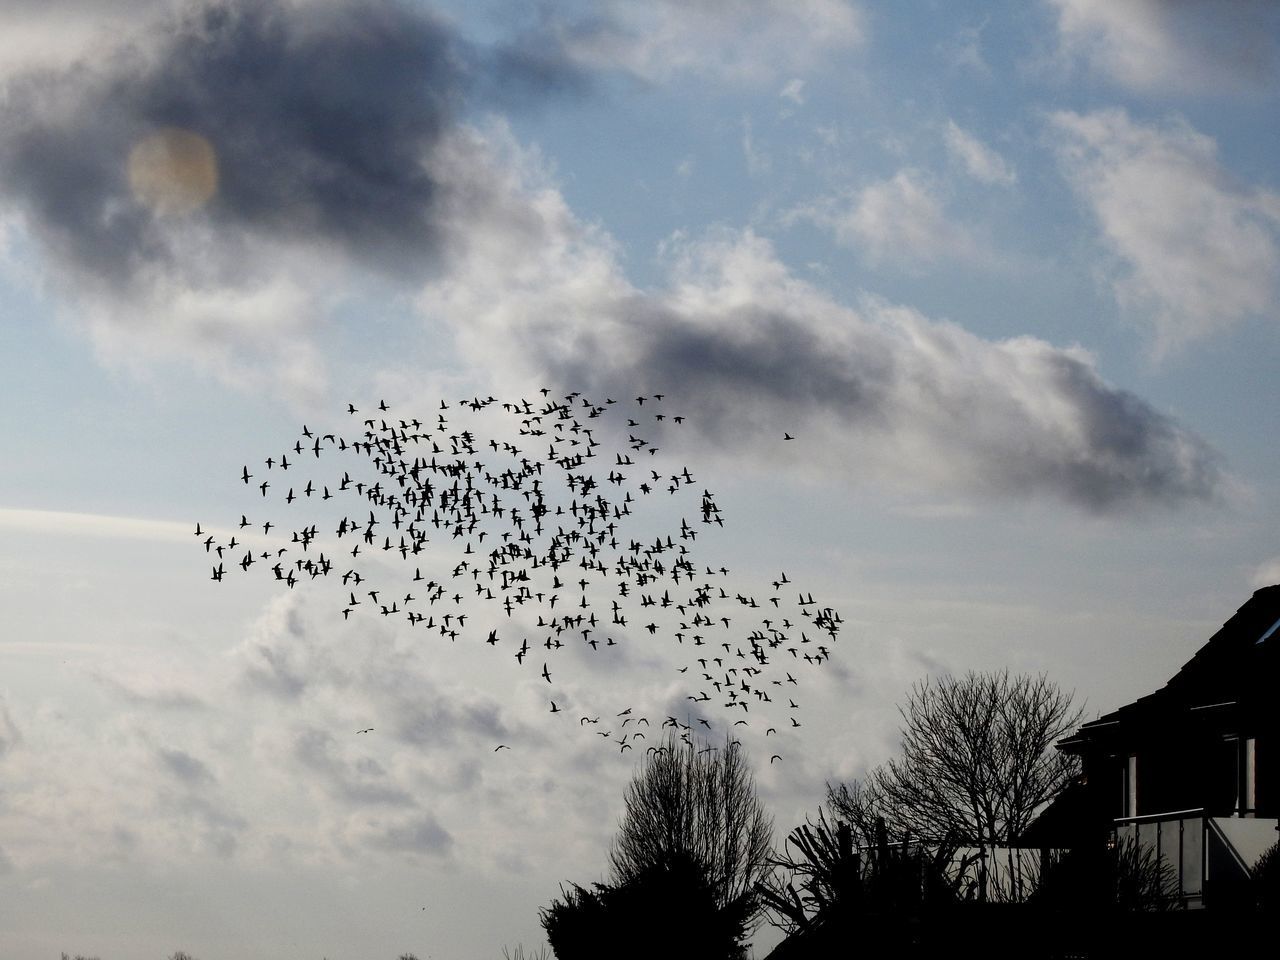 FLOCK OF BIRDS FLYING IN SKY